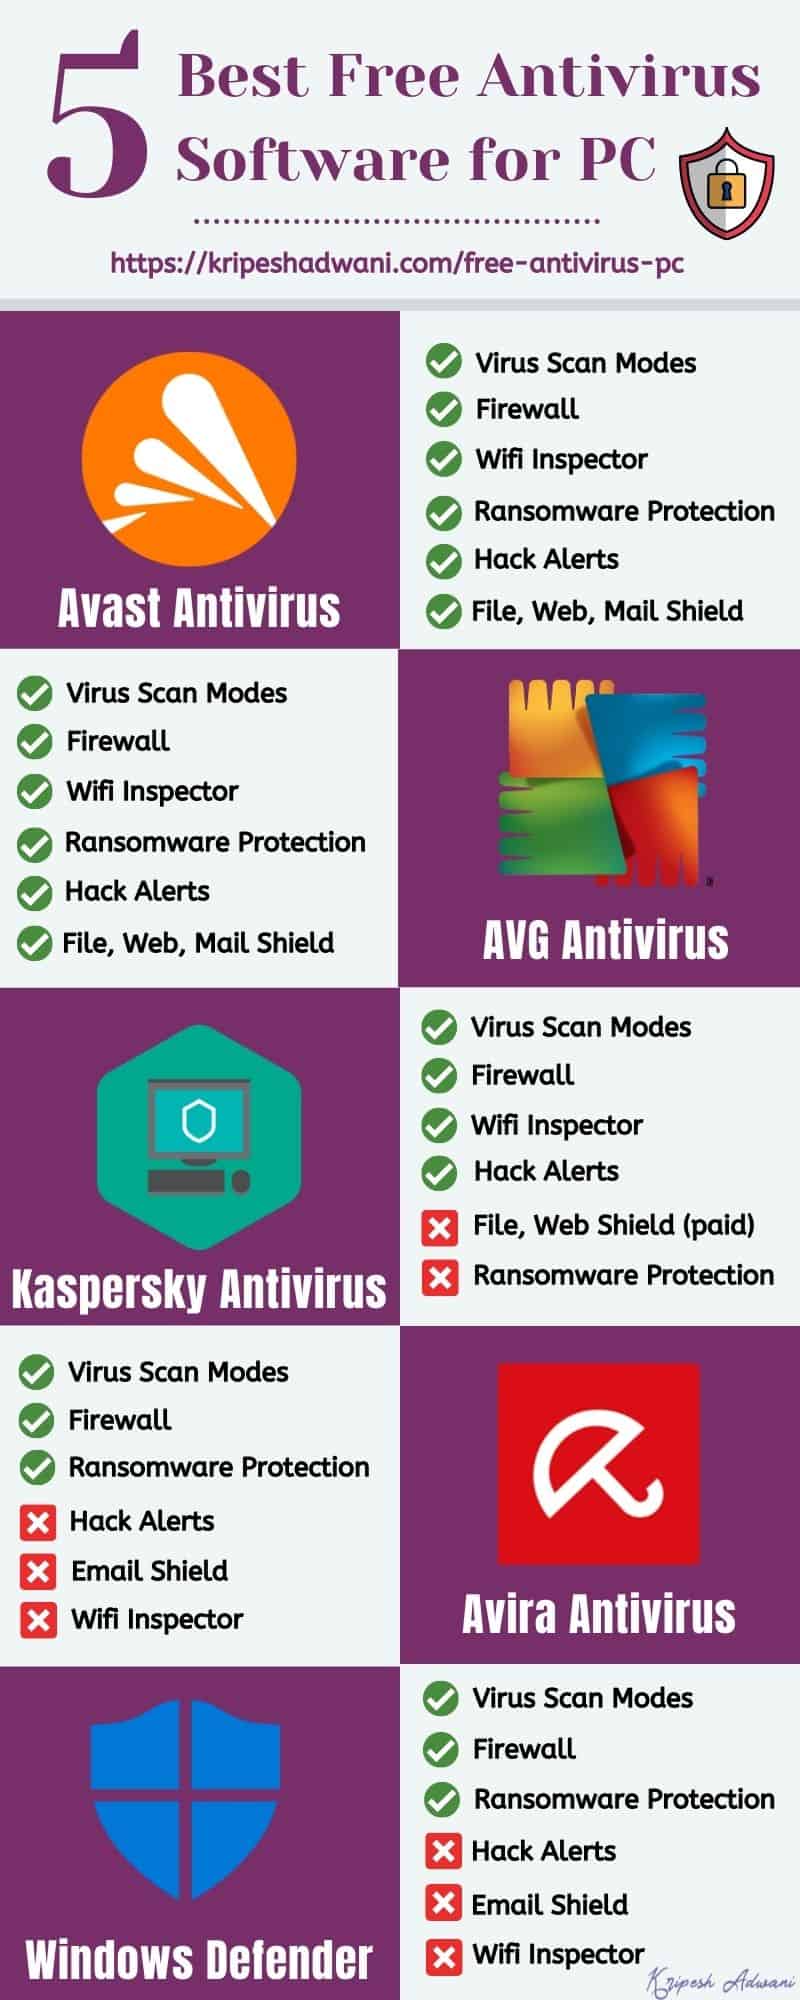 What is an Antivirus Program?